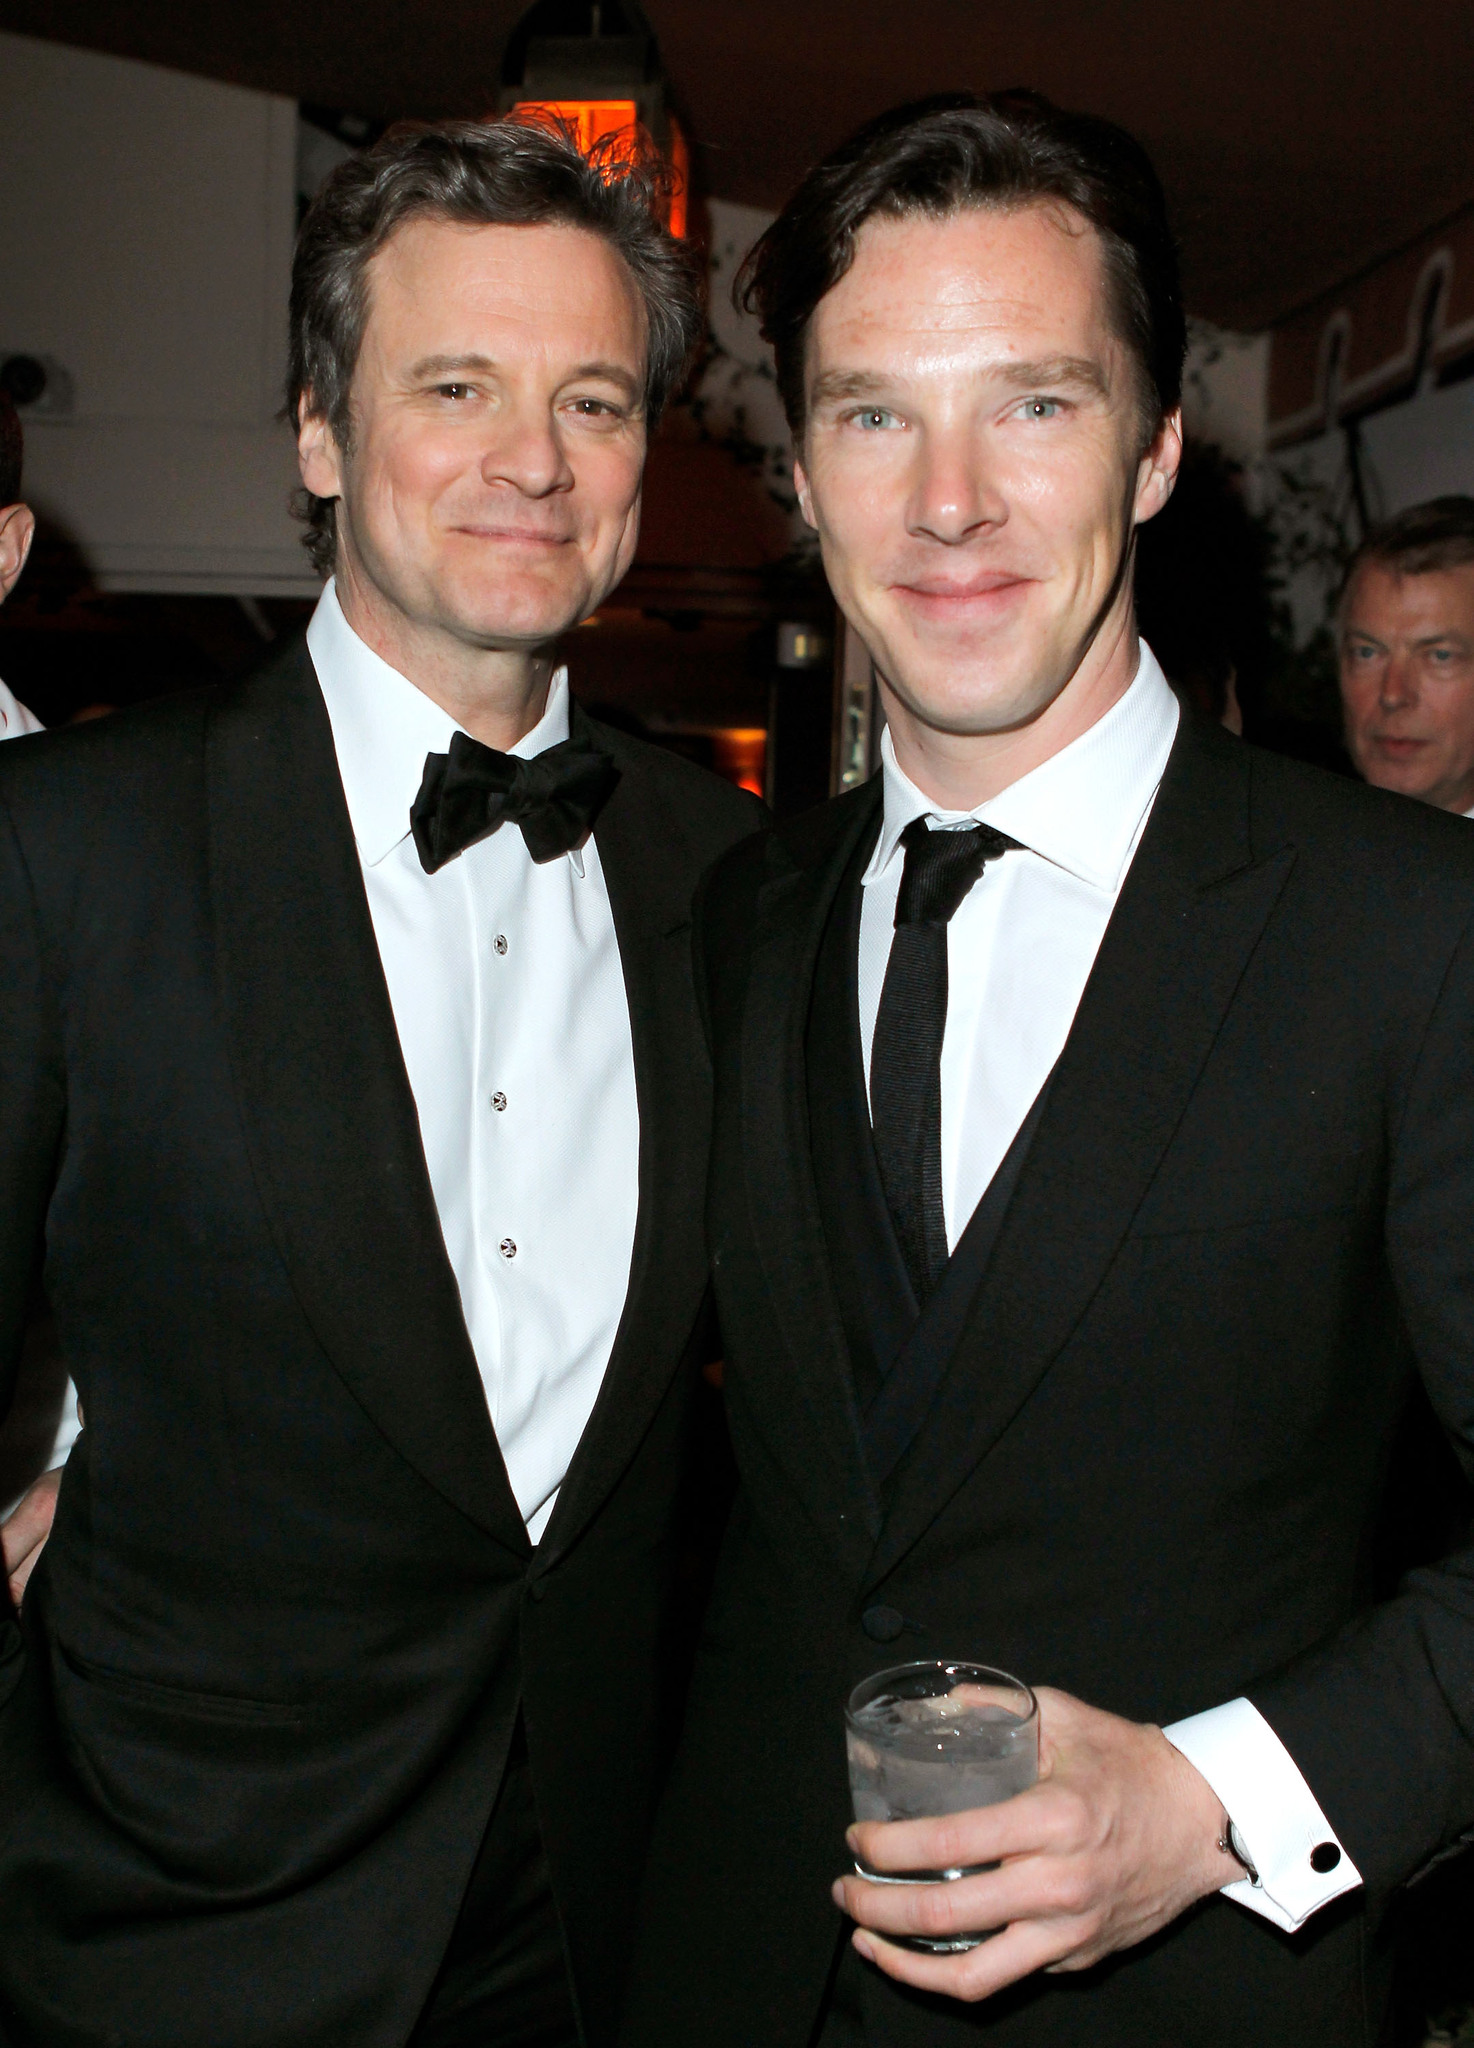 Colin Firth and Benedict Cumberbatch